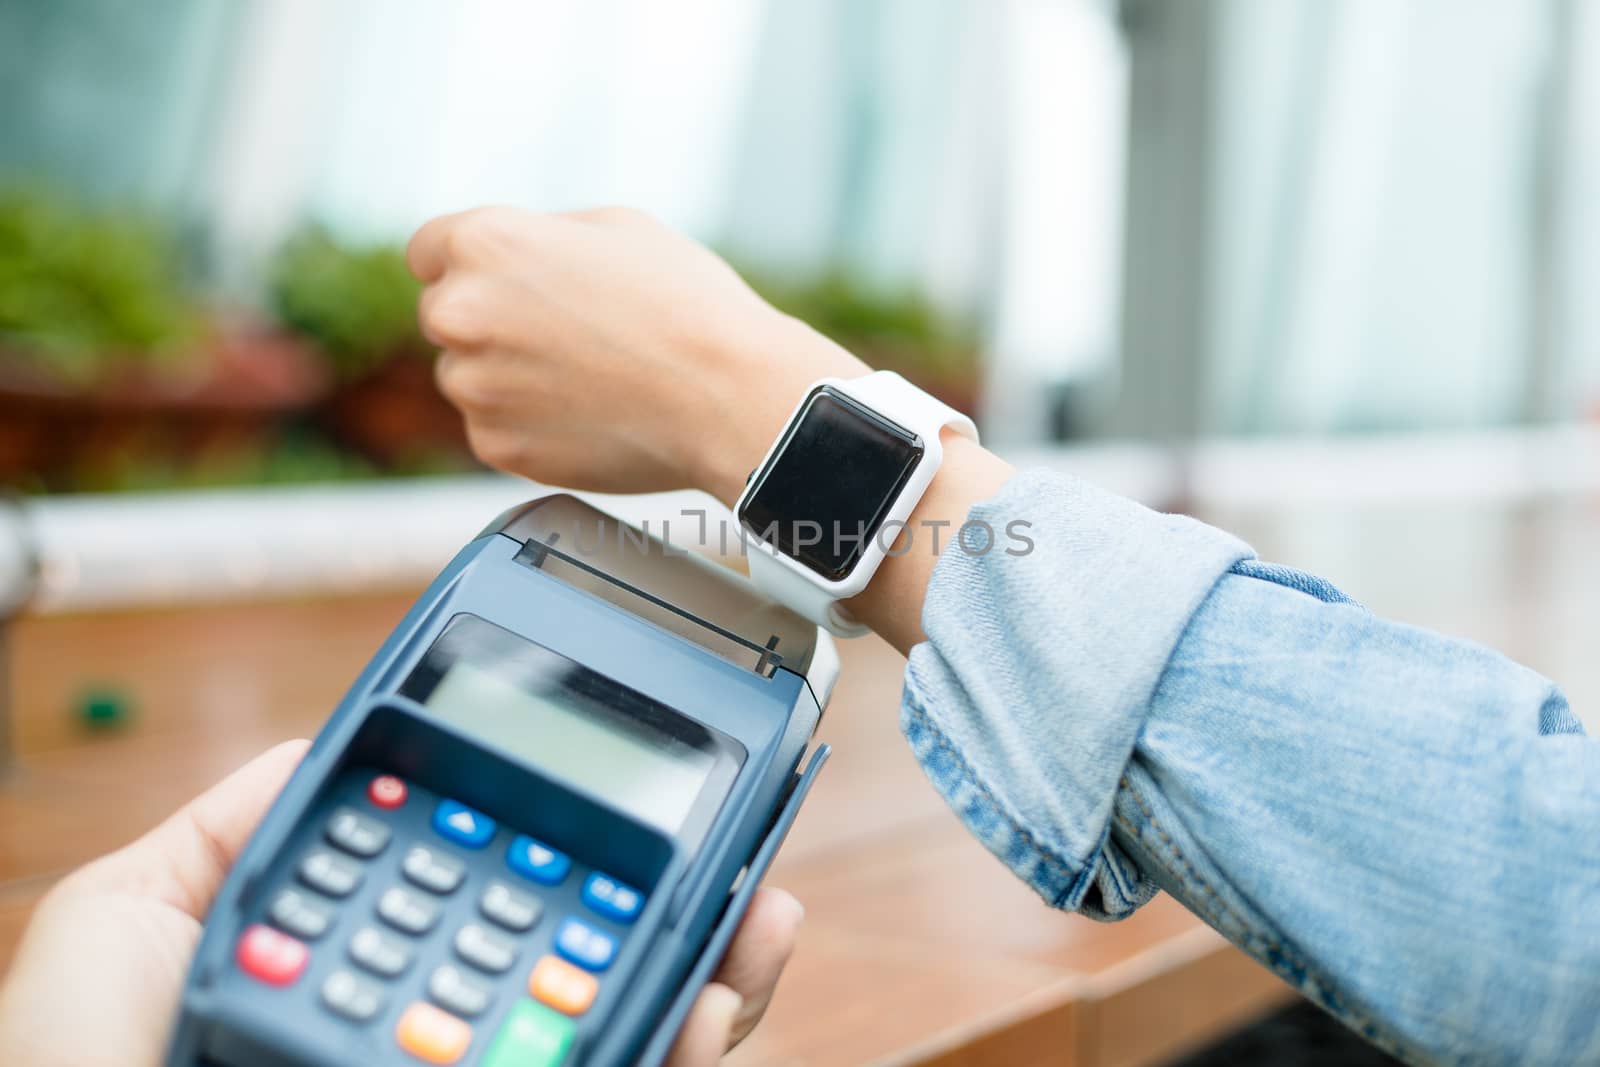 Customer paying through smart watch by leungchopan